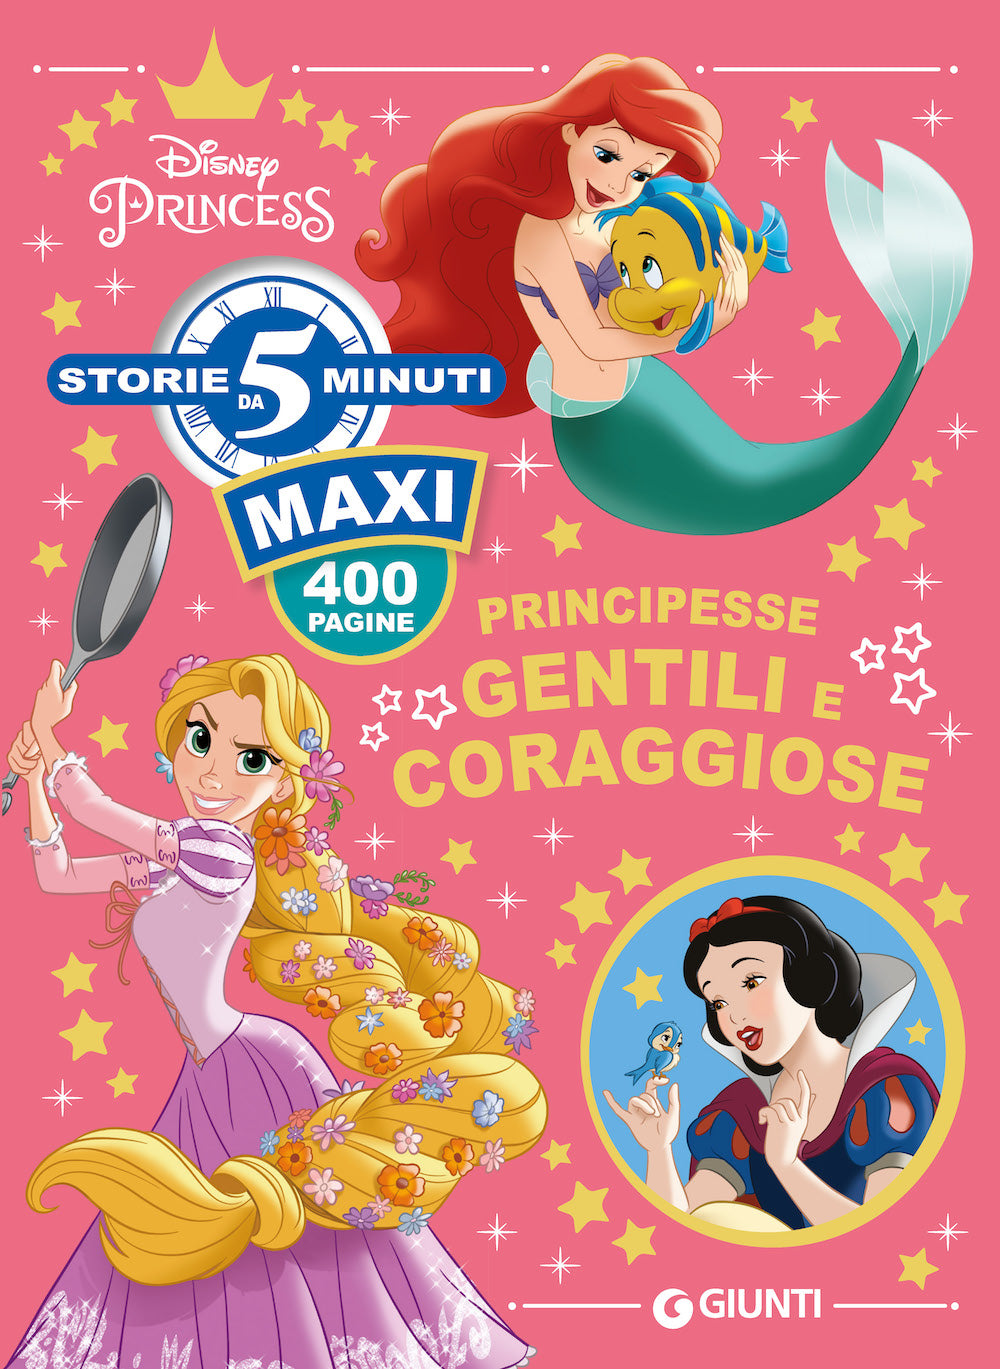 Principesse gentili e coraggiose - Storie da 5 minuti MAXI. 400 Pagine - Disney Princess